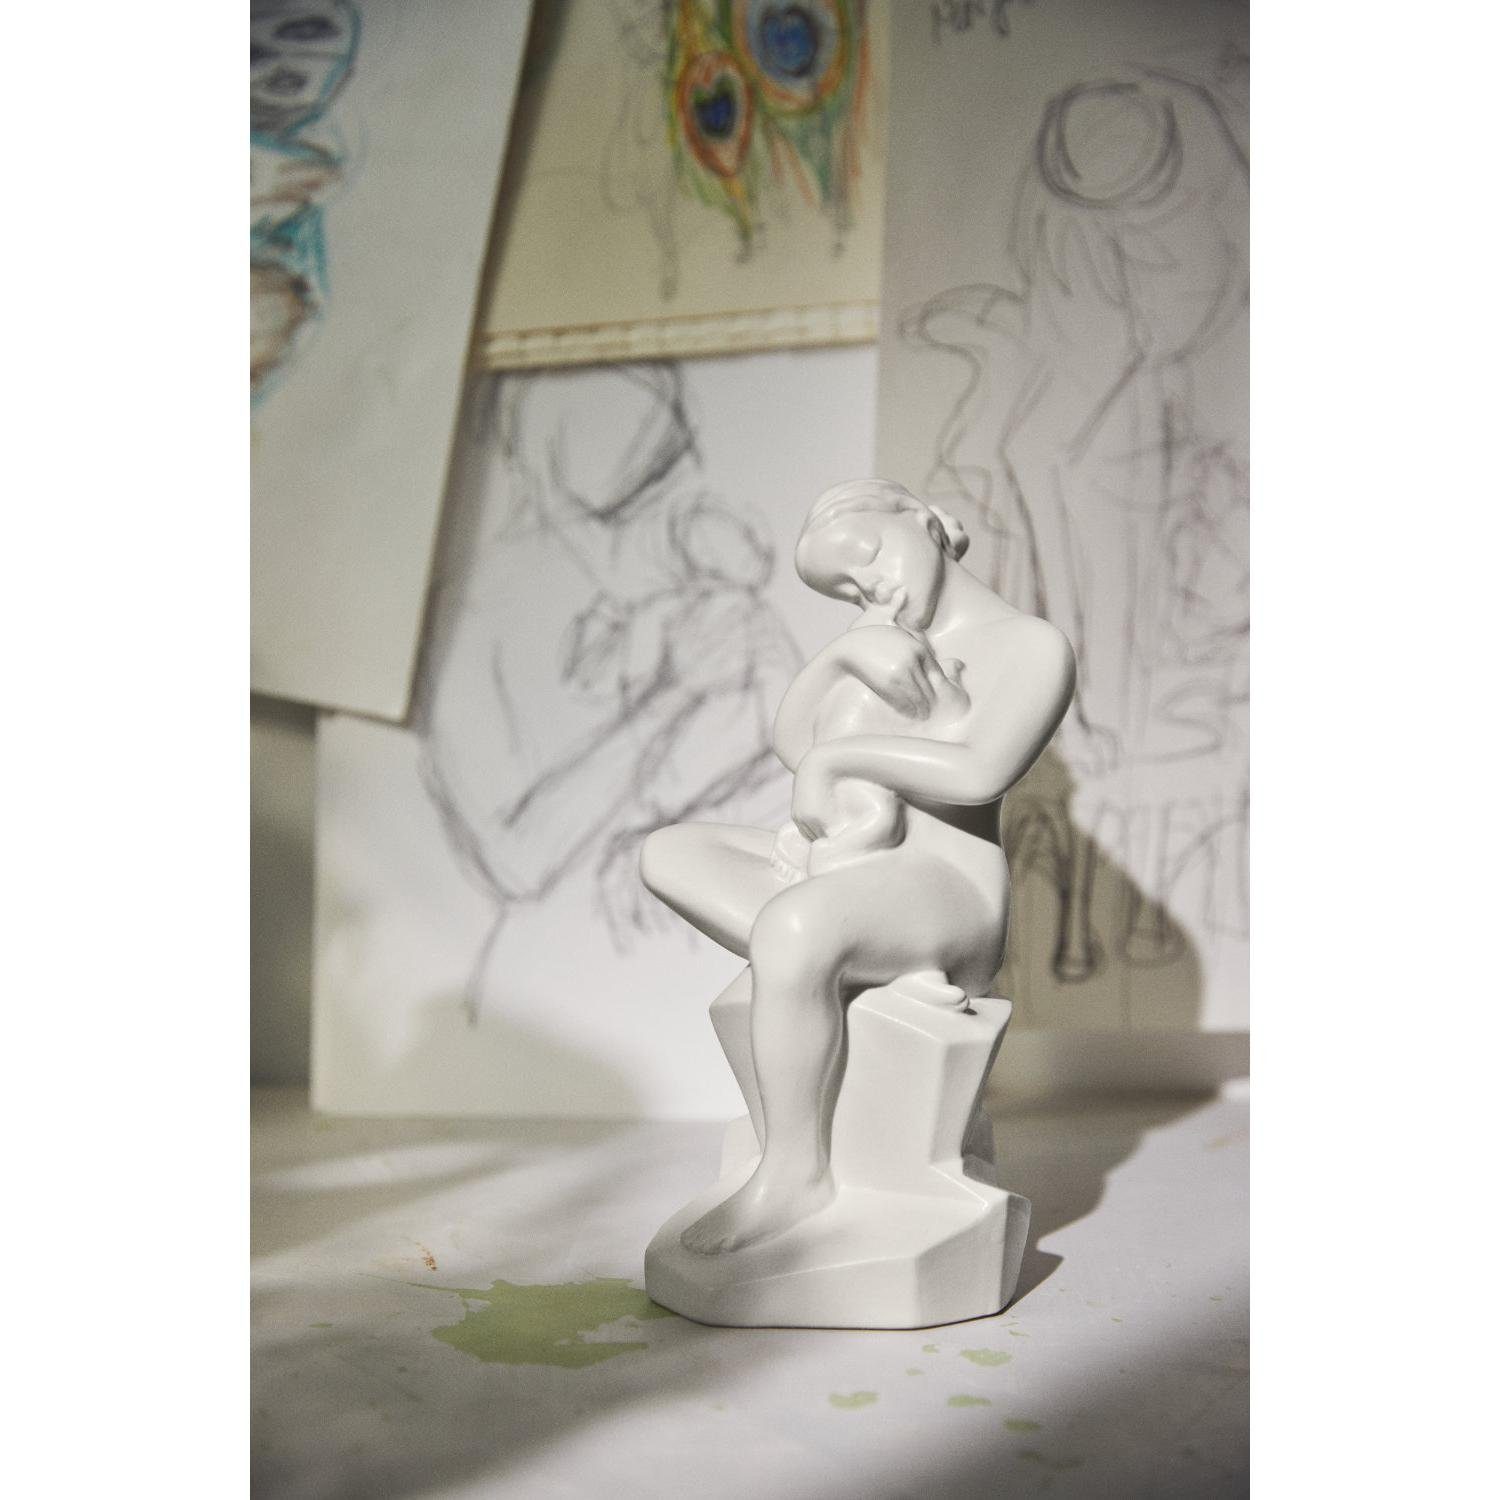 Skulptur (23cm) Weiß of Kähler Being Moments Beginnings Porzellanfirgur